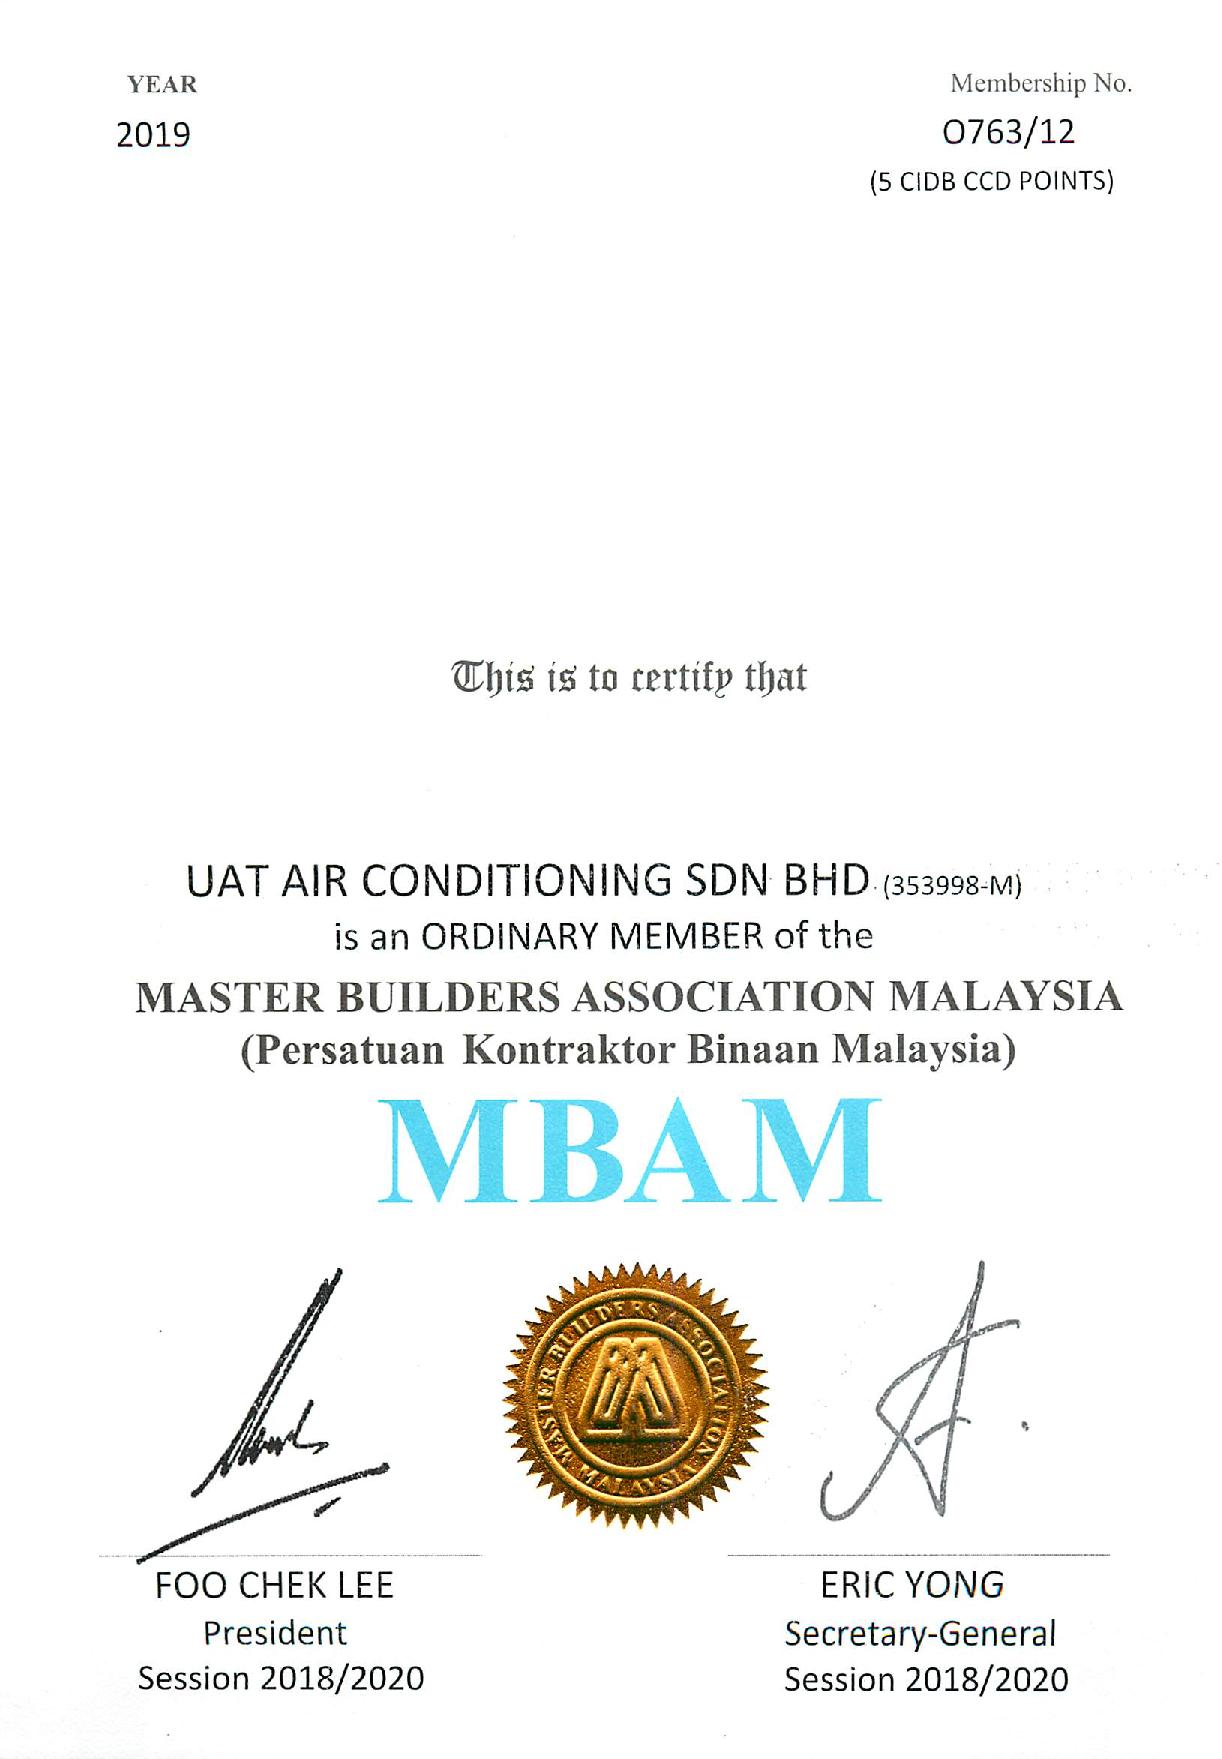 Master Builders Association Malaysia